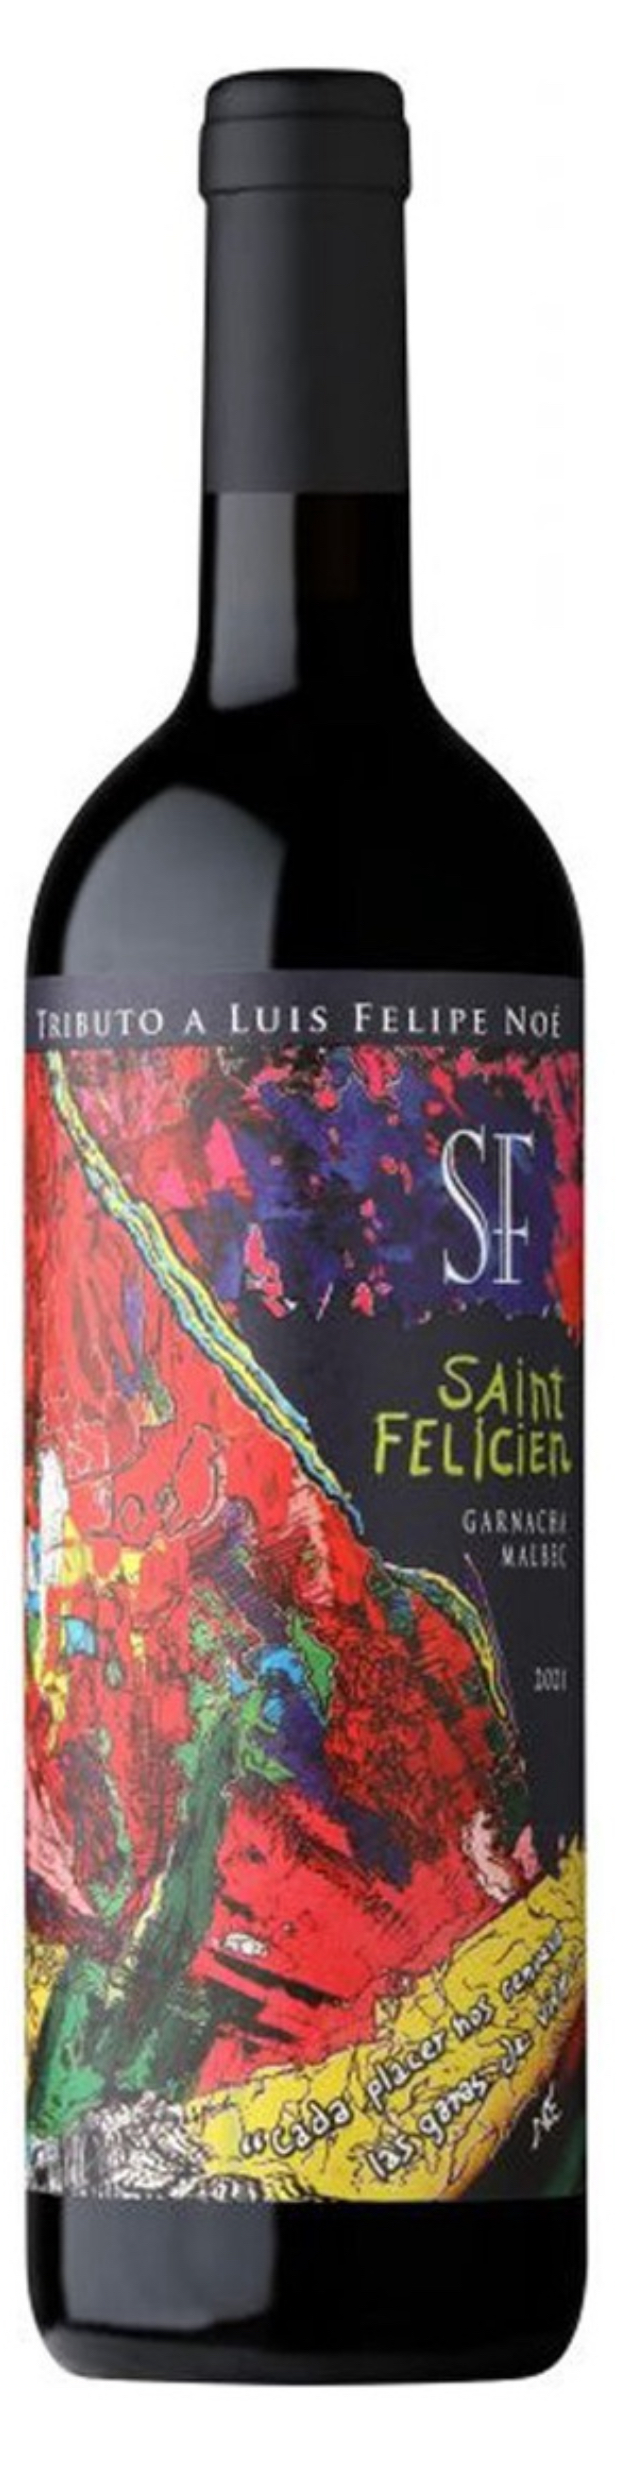 Saint Felicien Felipe Noe